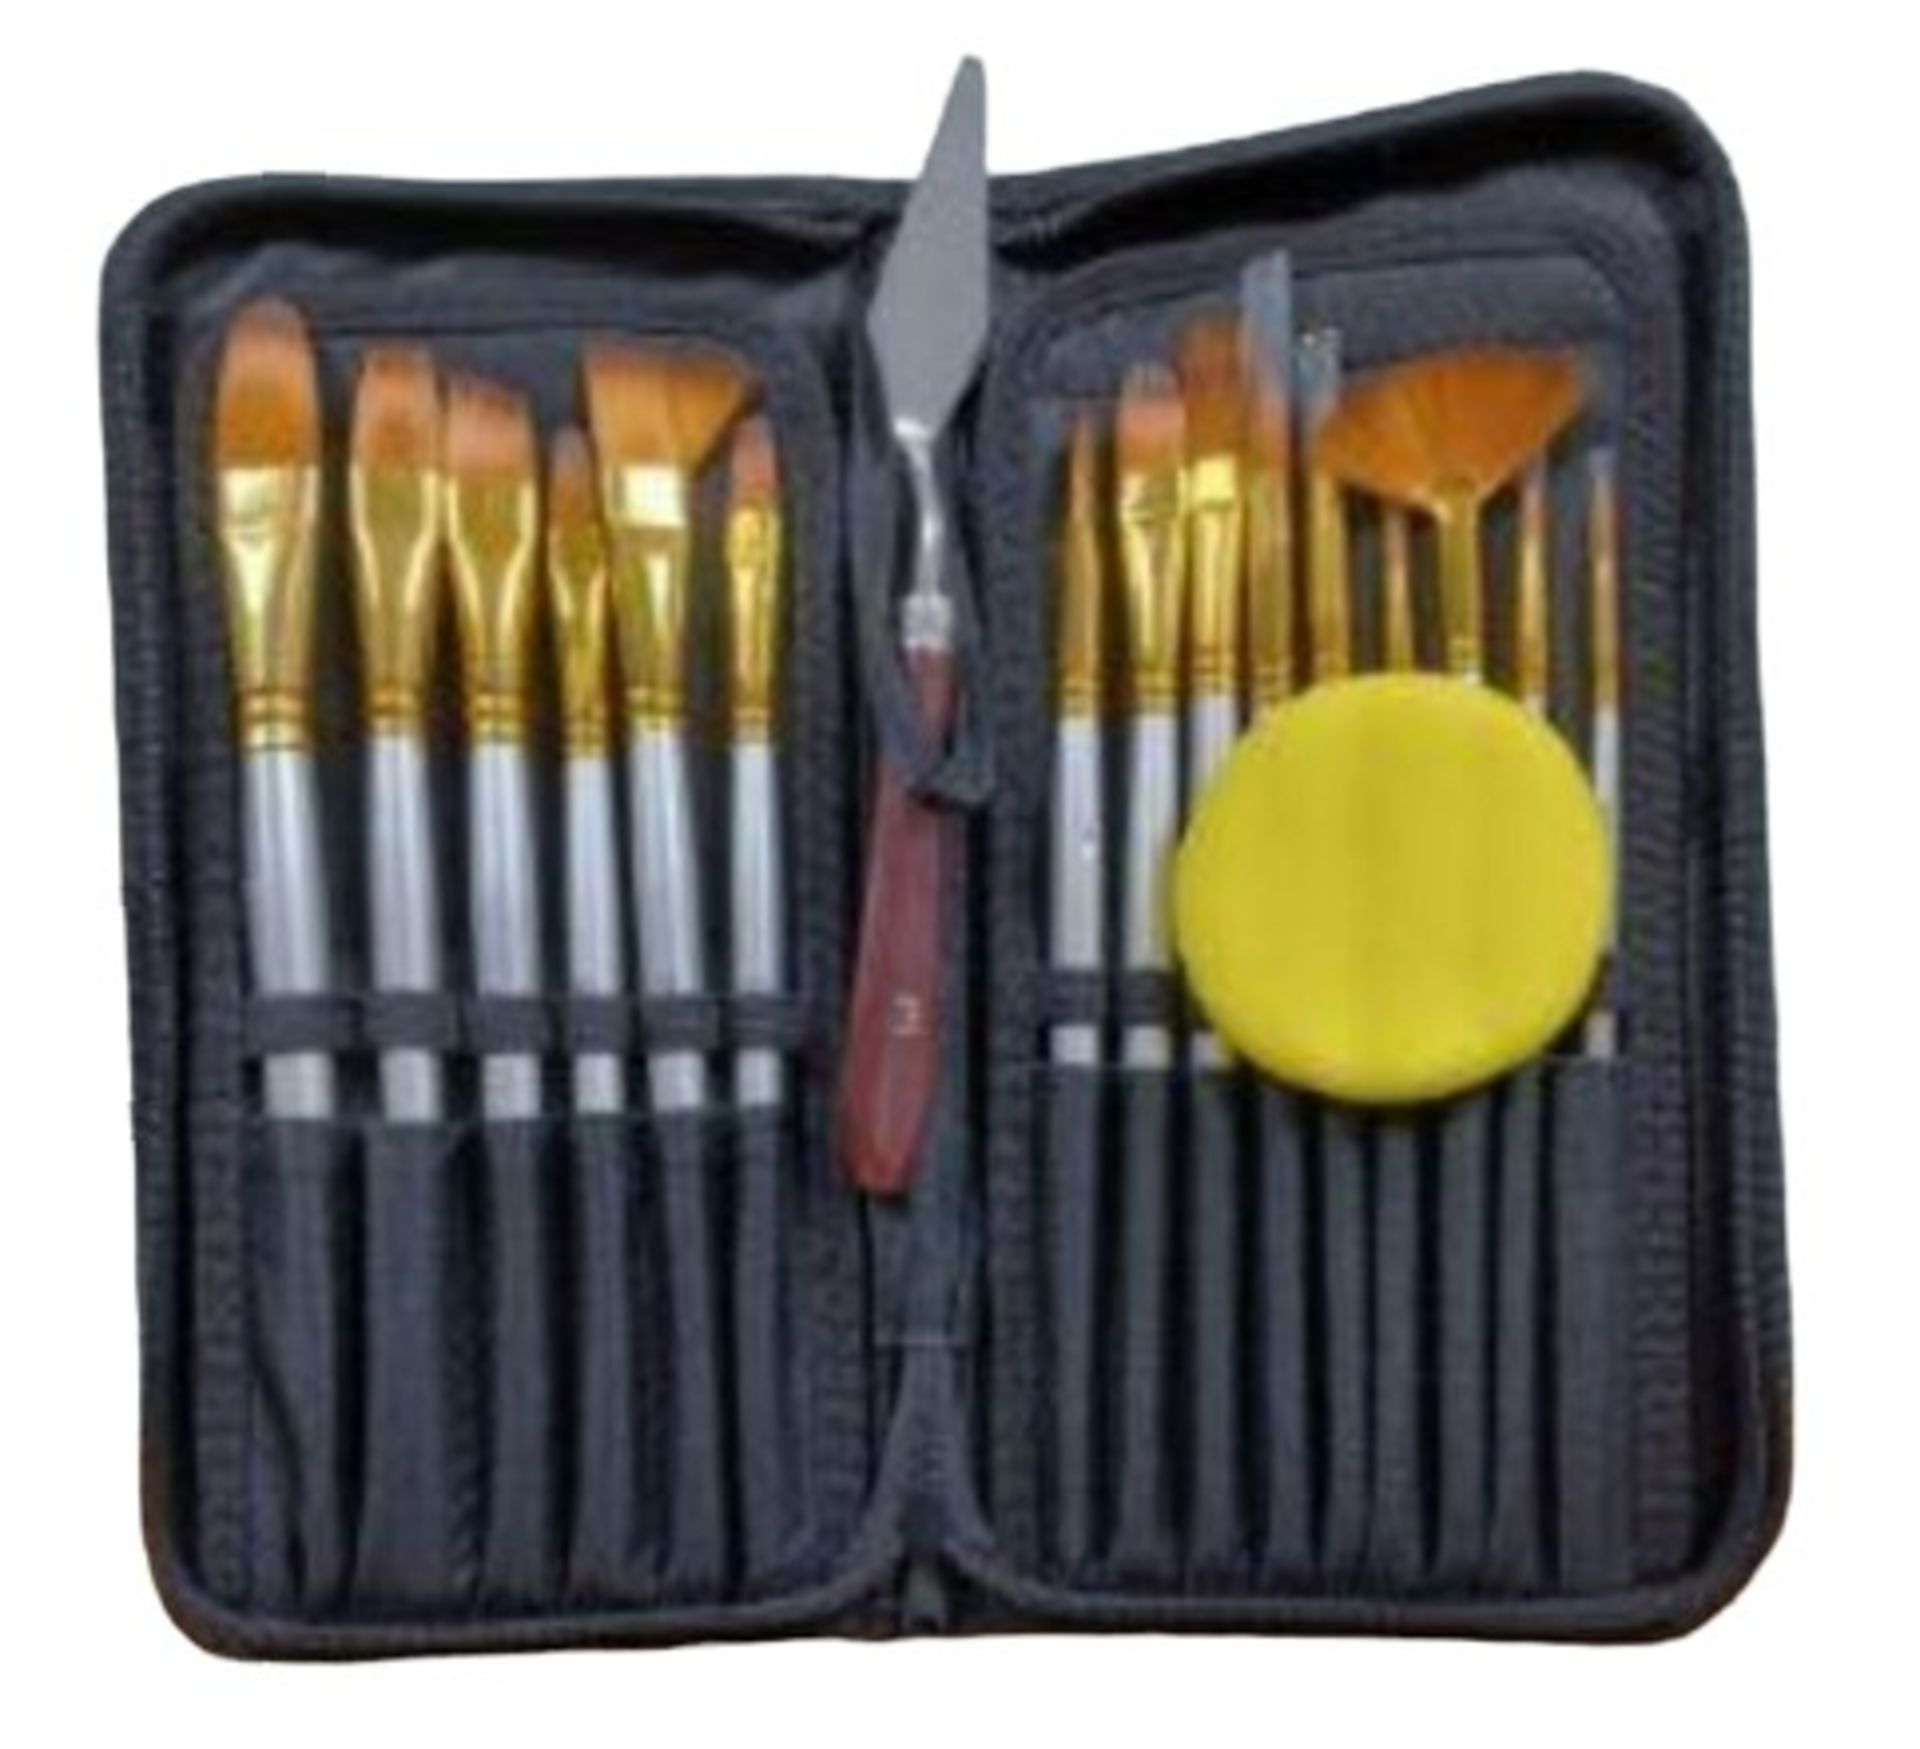 15 Piece Artists Paint Brush Set & Case Knife & Sponge Included